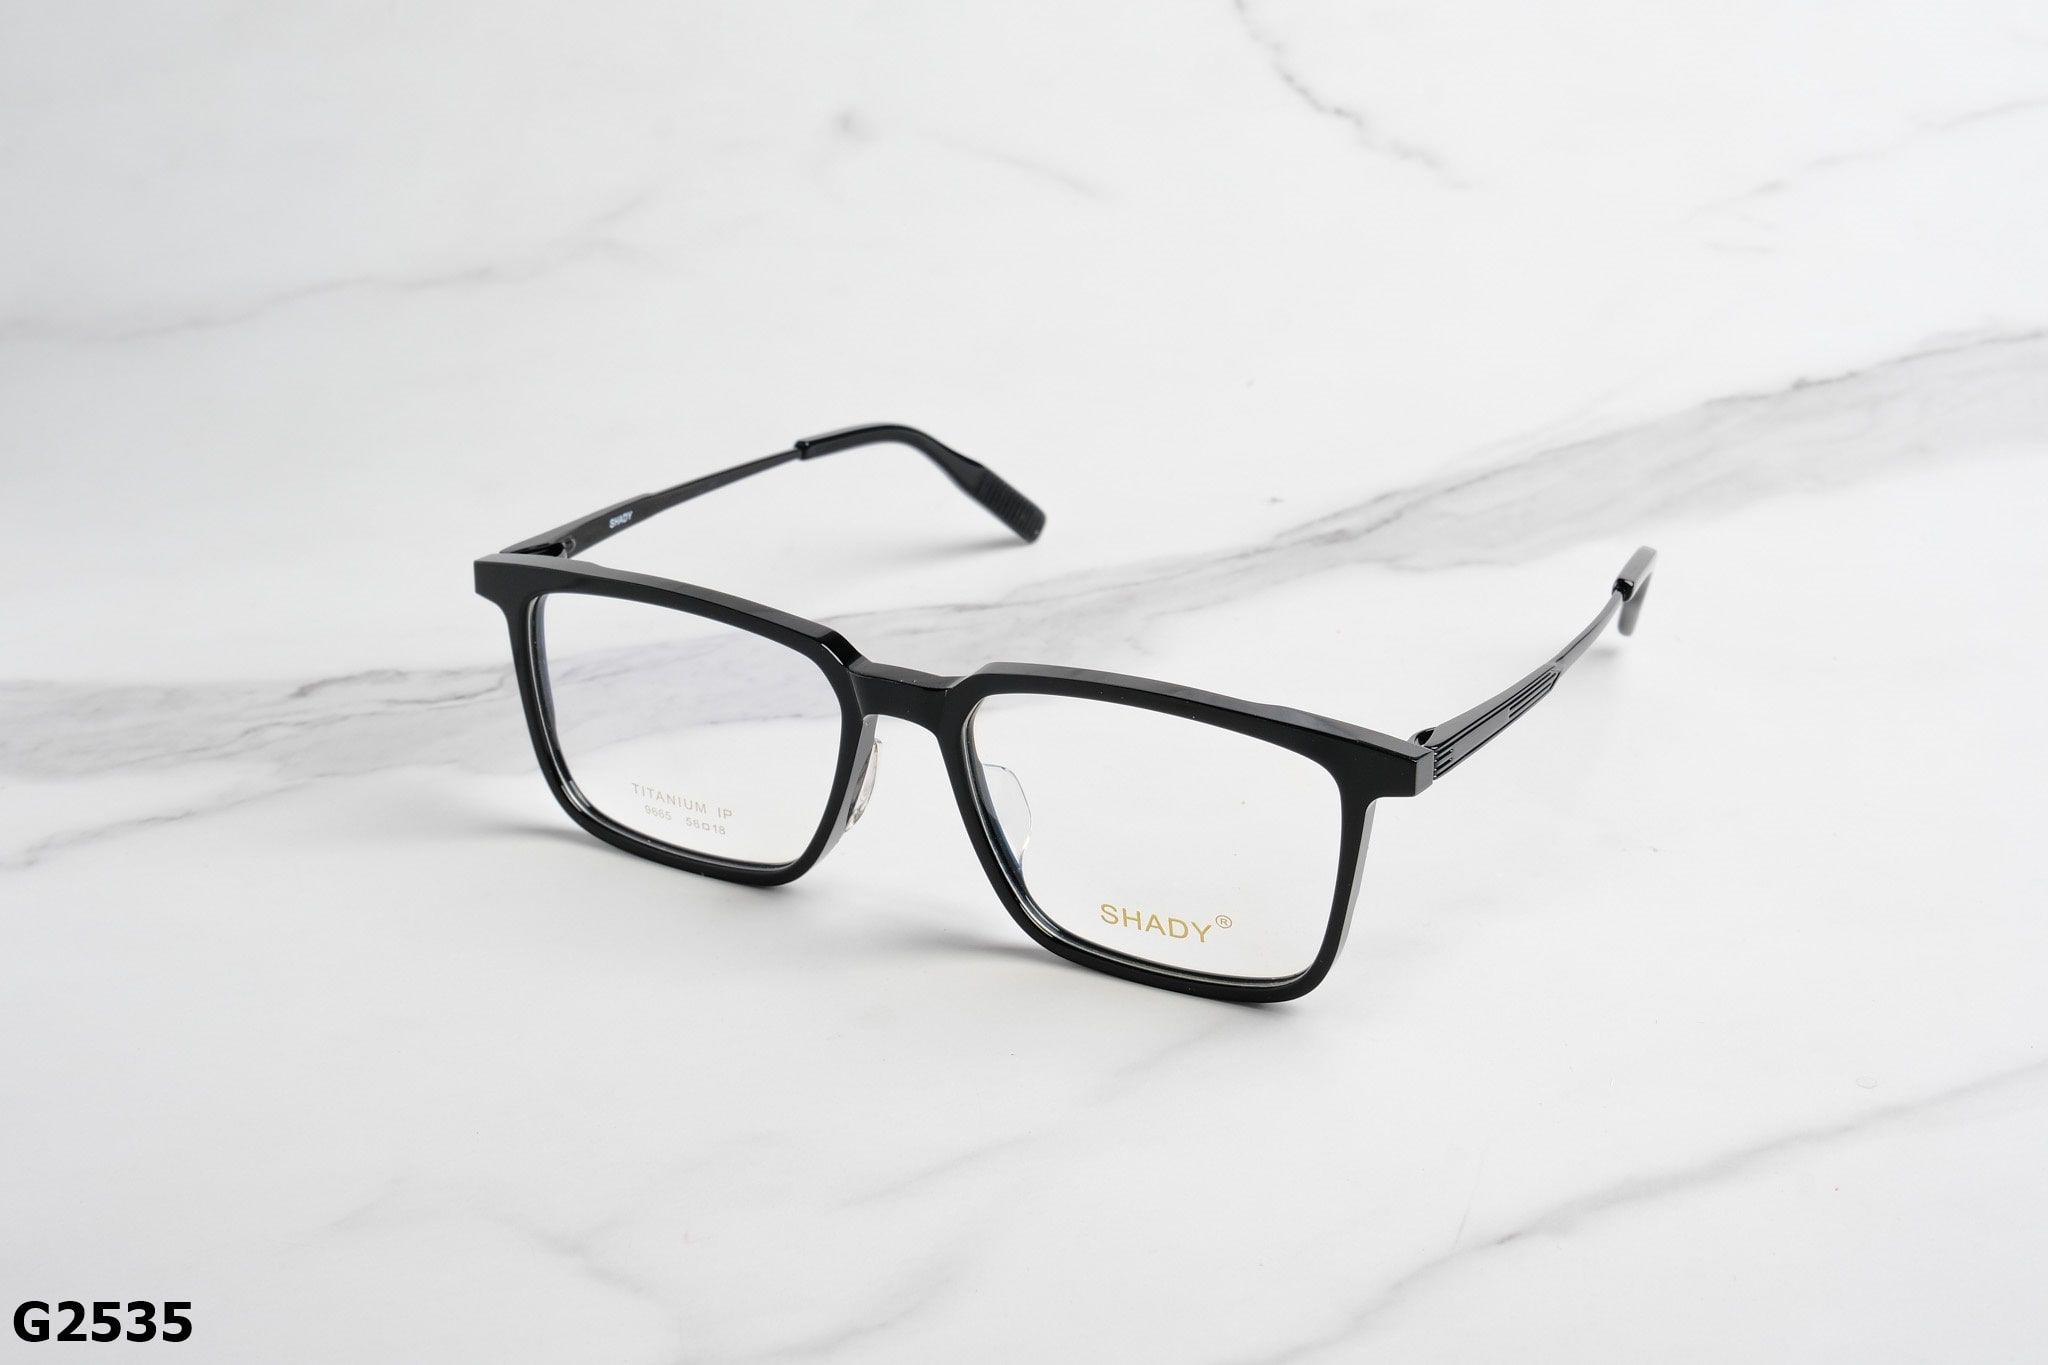  SHADY Eyewear - Glasses - G2535 